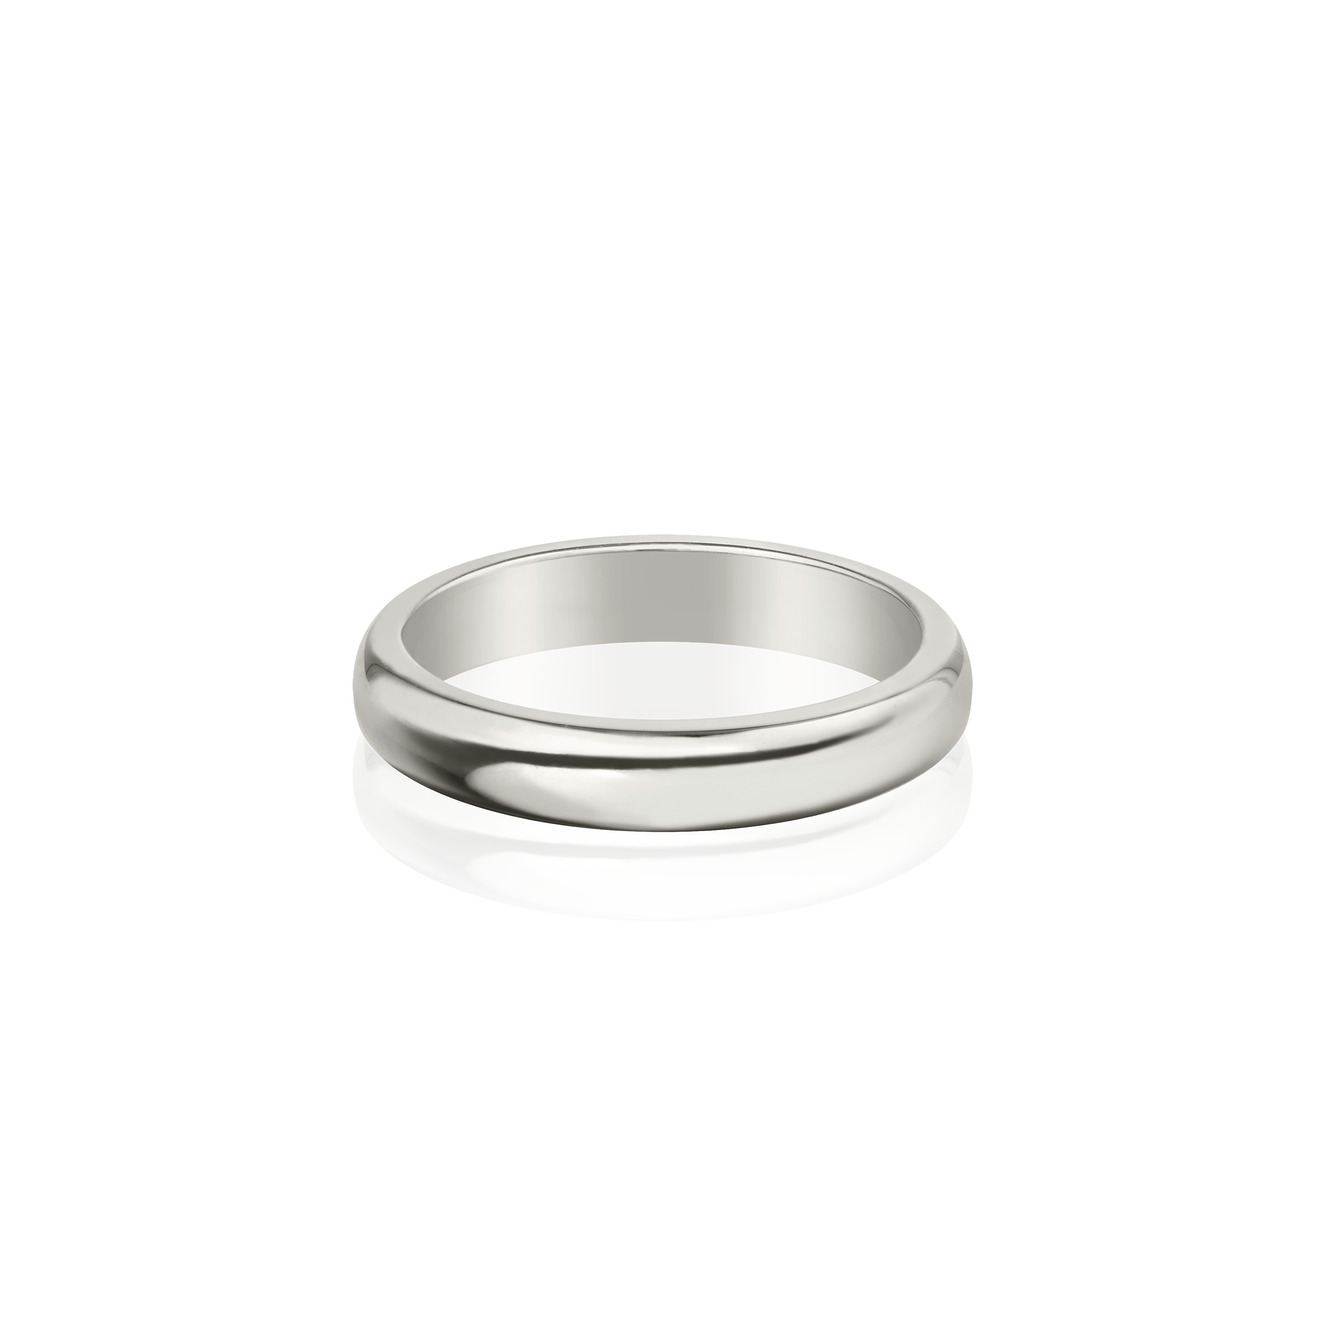 Vertigo Jewellery Lab Фаланговое кольцо из серебра ESSENTIALS